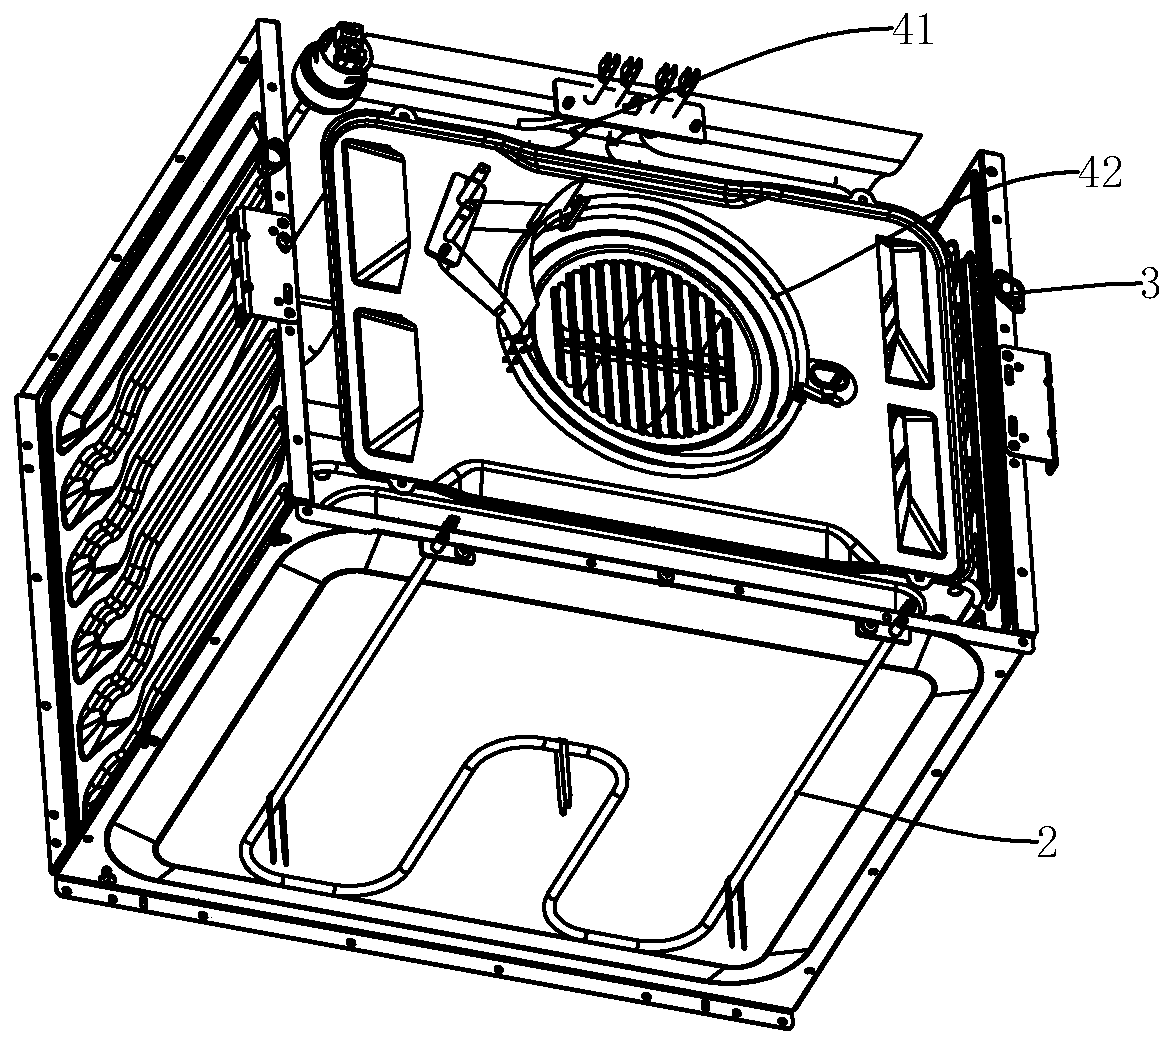 Circuit control type oven